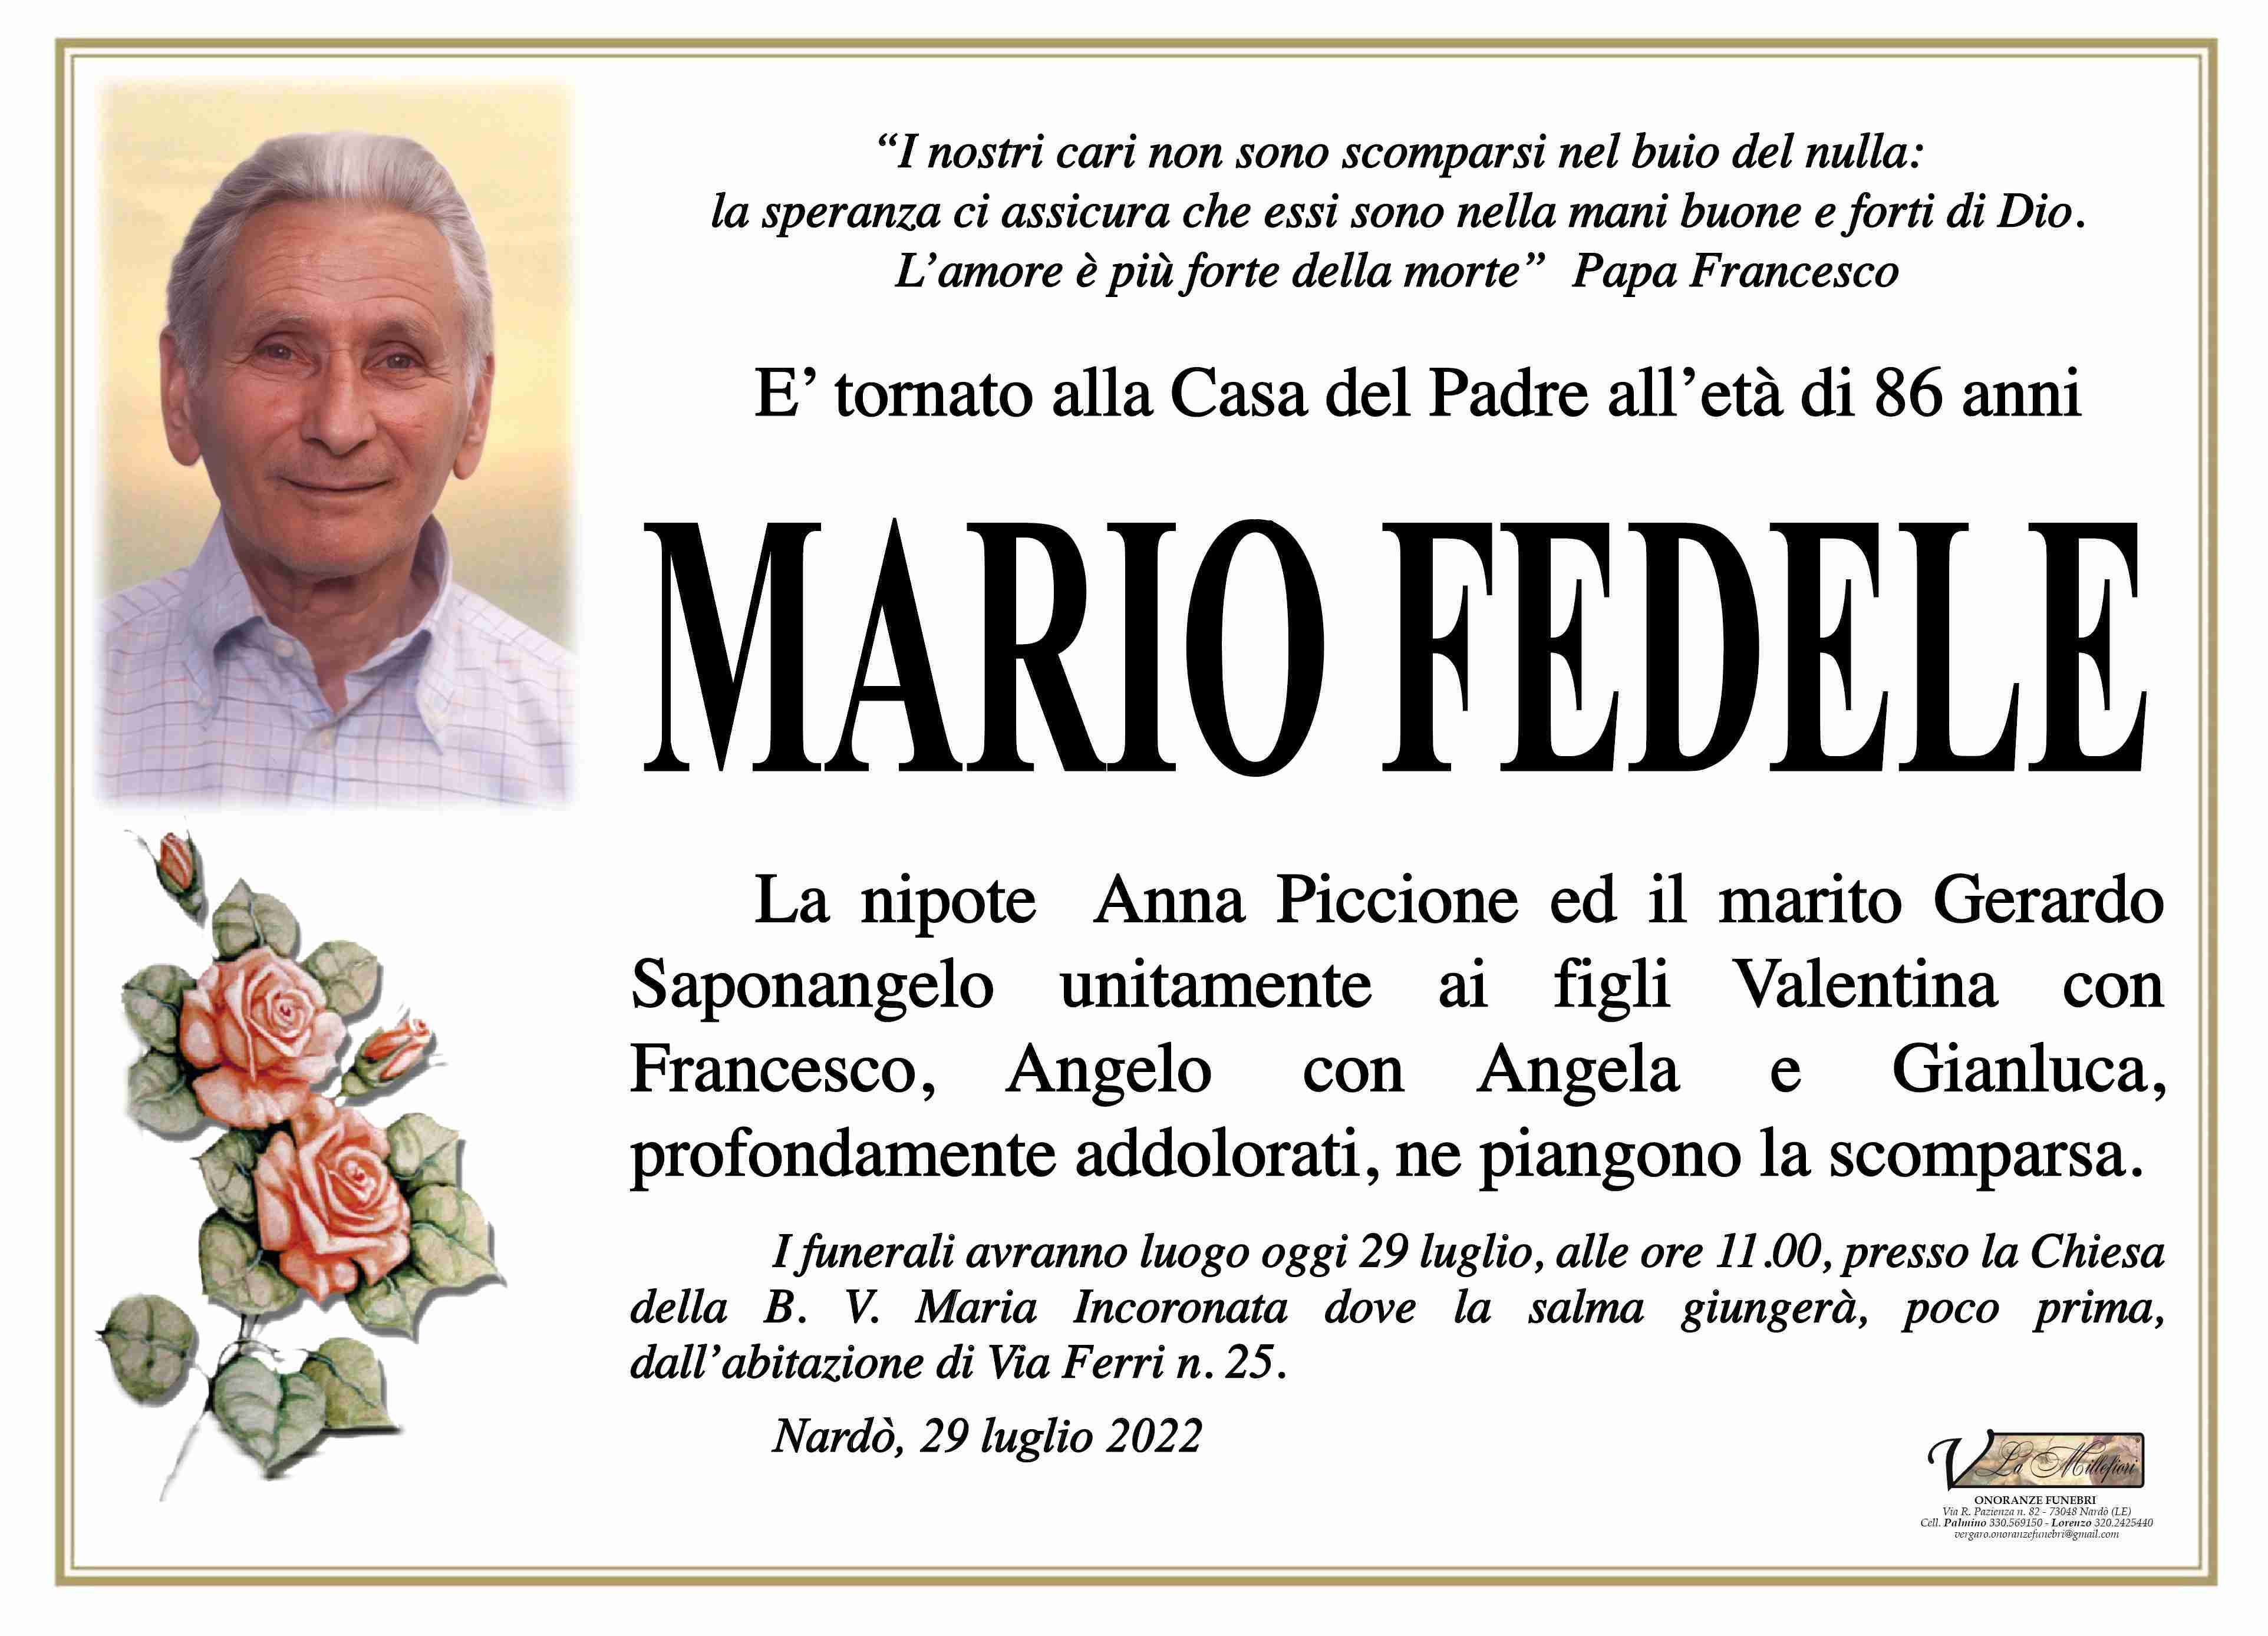 Mario Fedele